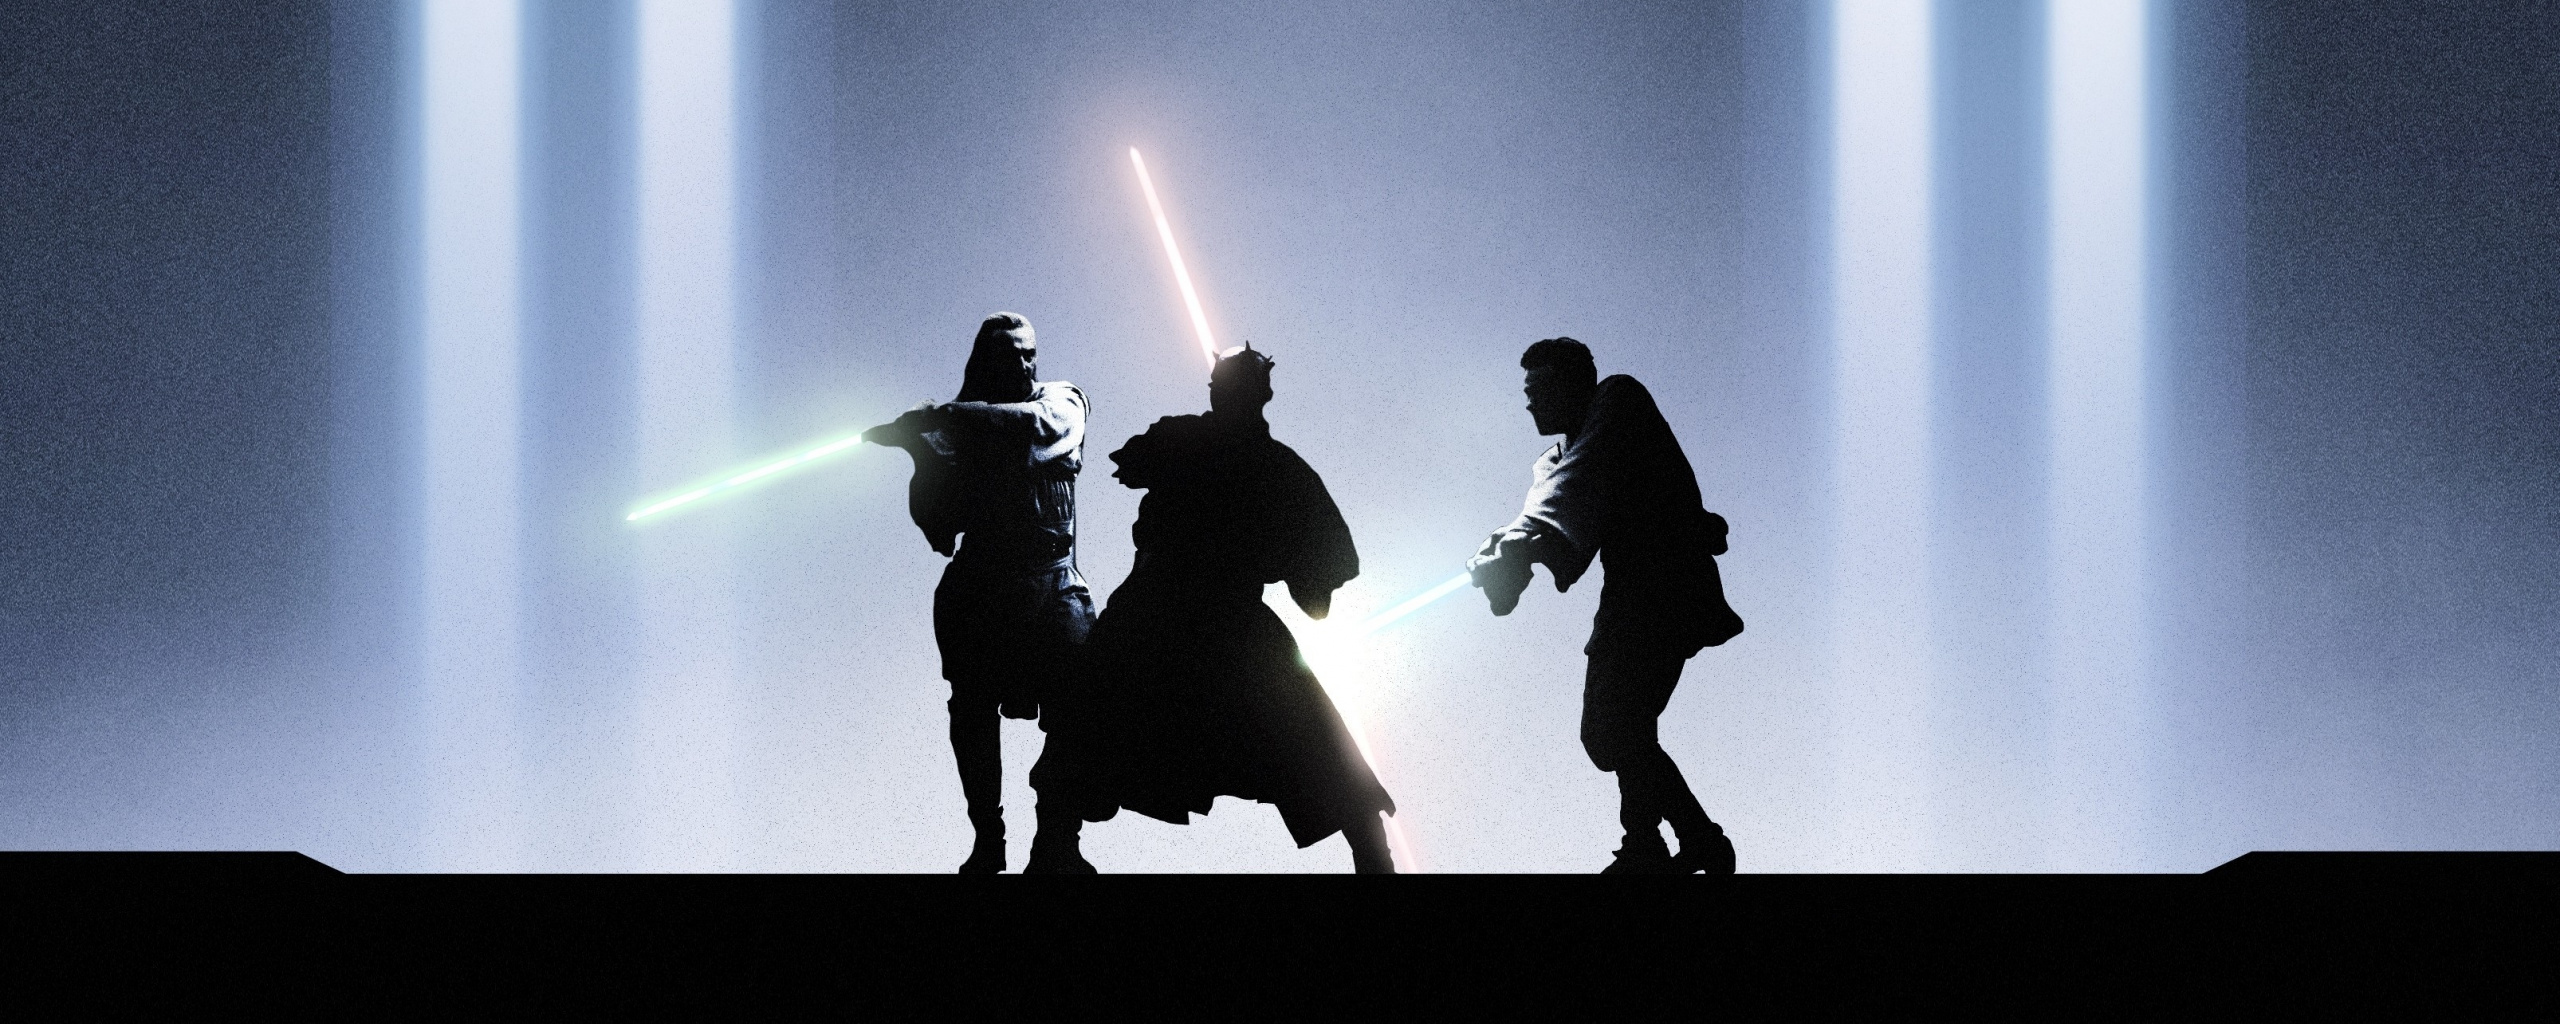 Download Star wars, Jedi, fight, artwork wallpaper, 2560x Dual Wide, Wide 21: Widescreen